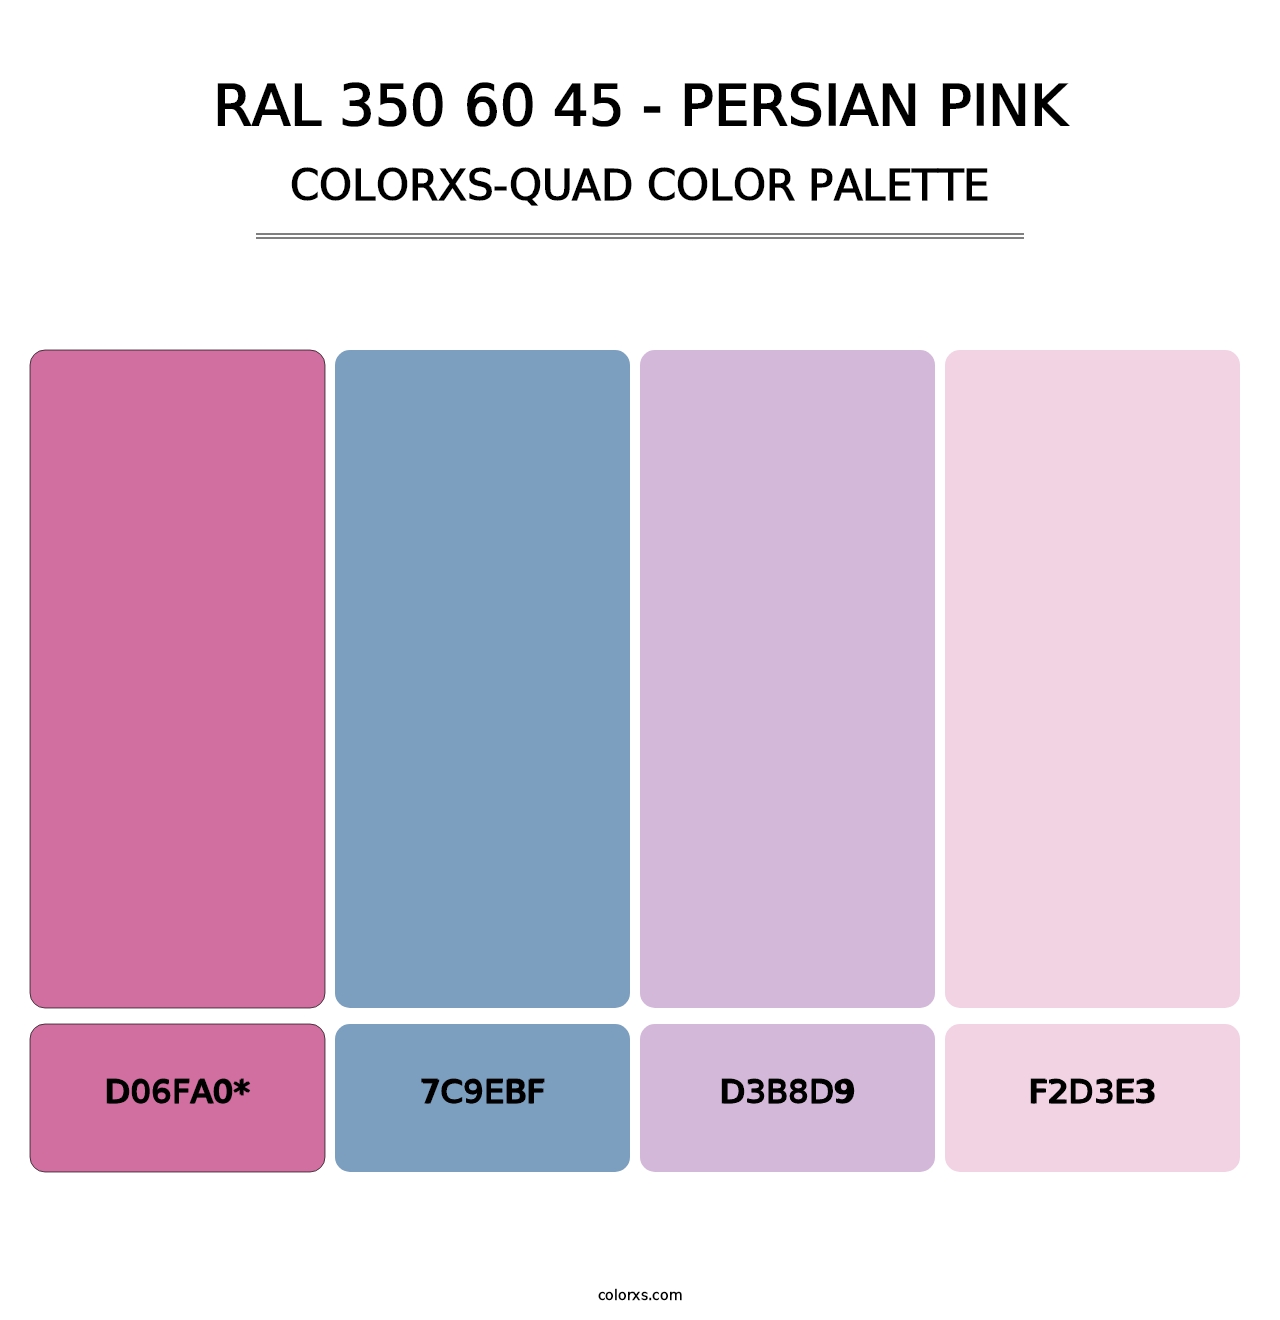 RAL 350 60 45 - Persian Pink - Colorxs Quad Palette